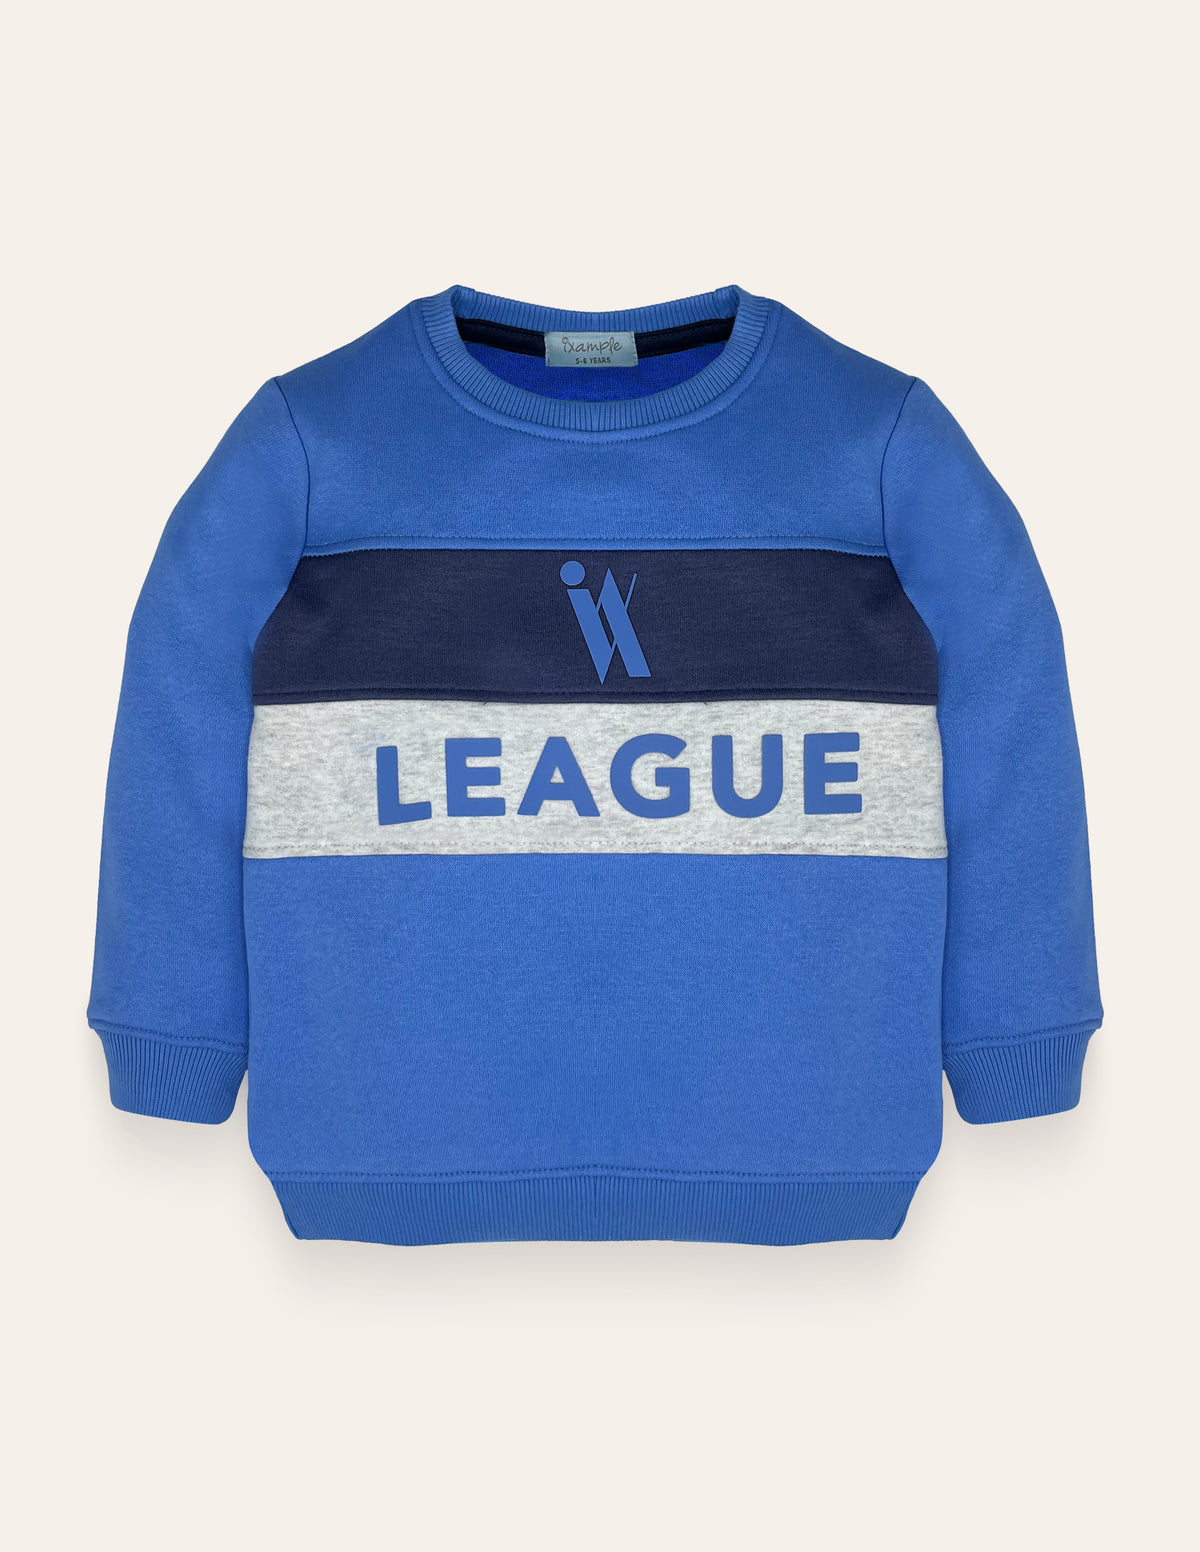 IX League Printed Sweatshirt